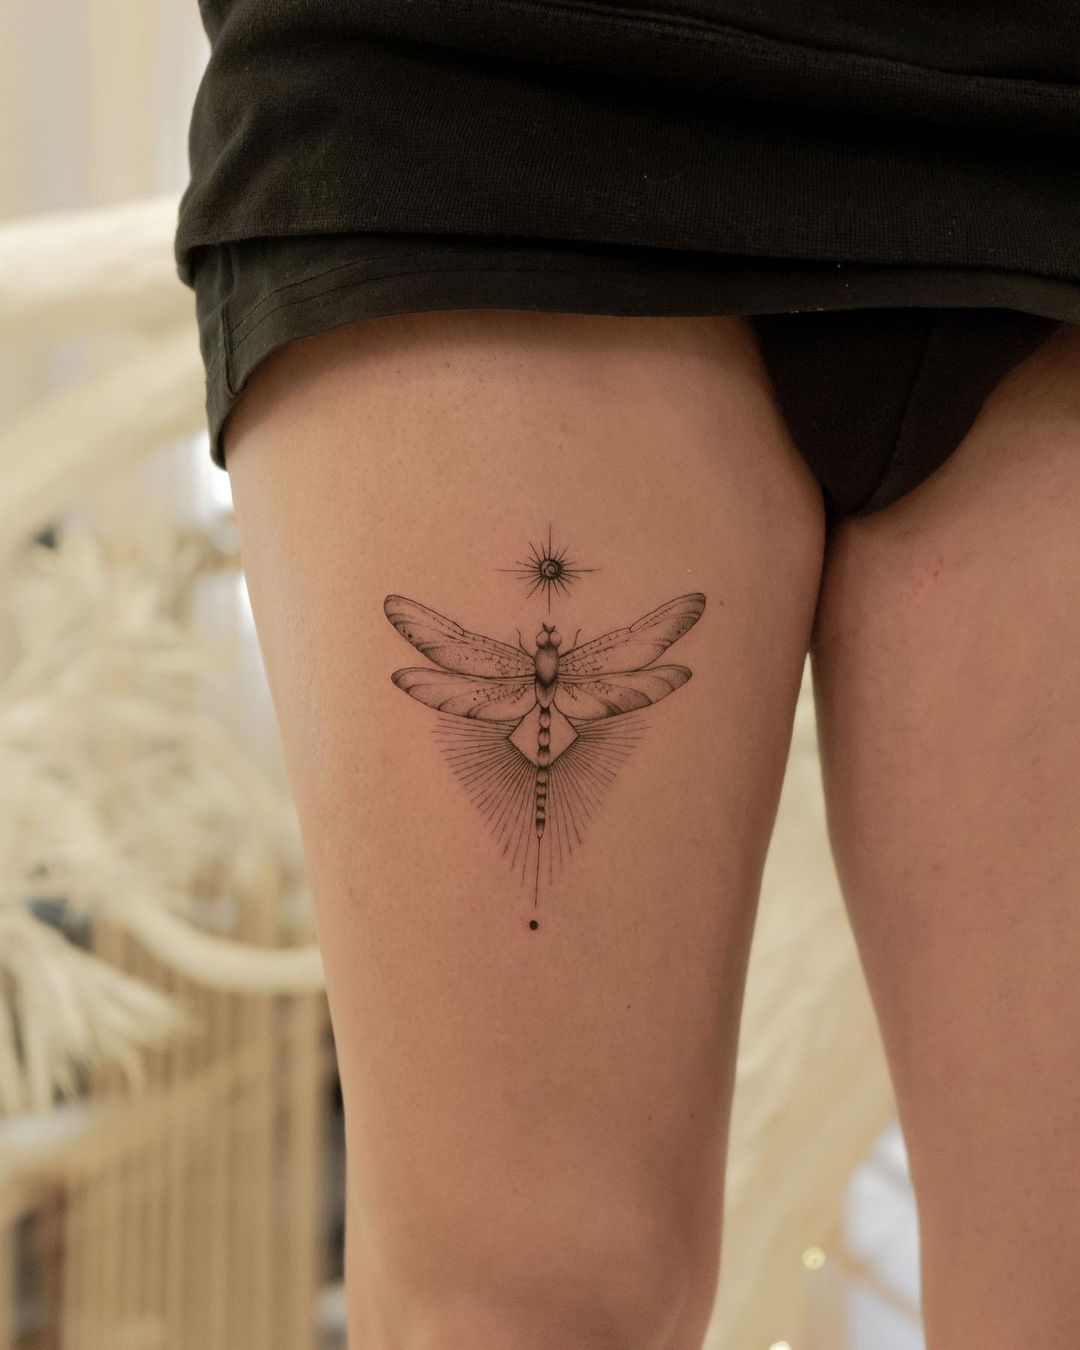 Dragonfly tattoo by fda lights